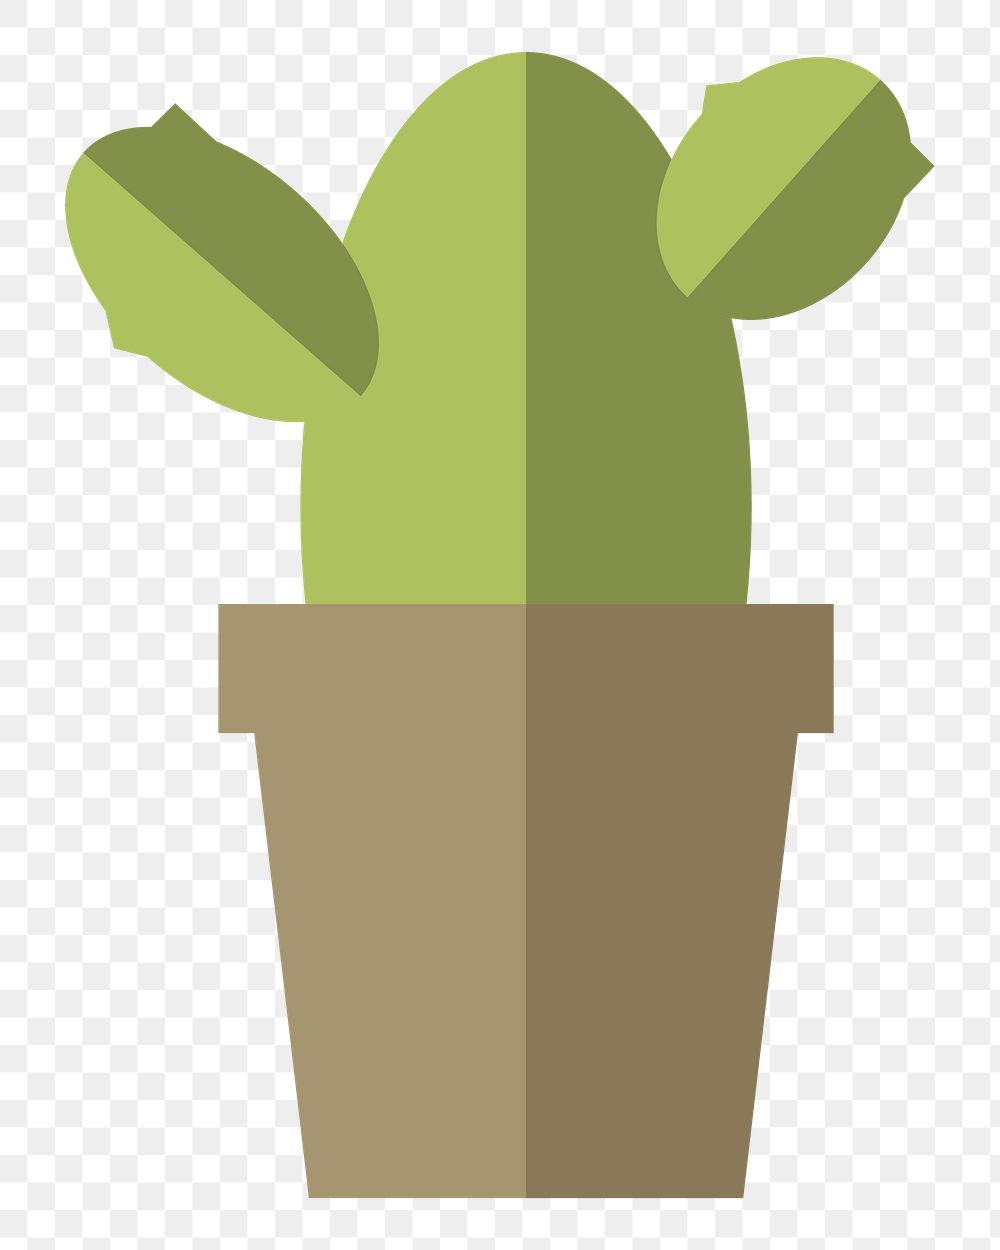 Cactus plant in a pot  png, transparent background